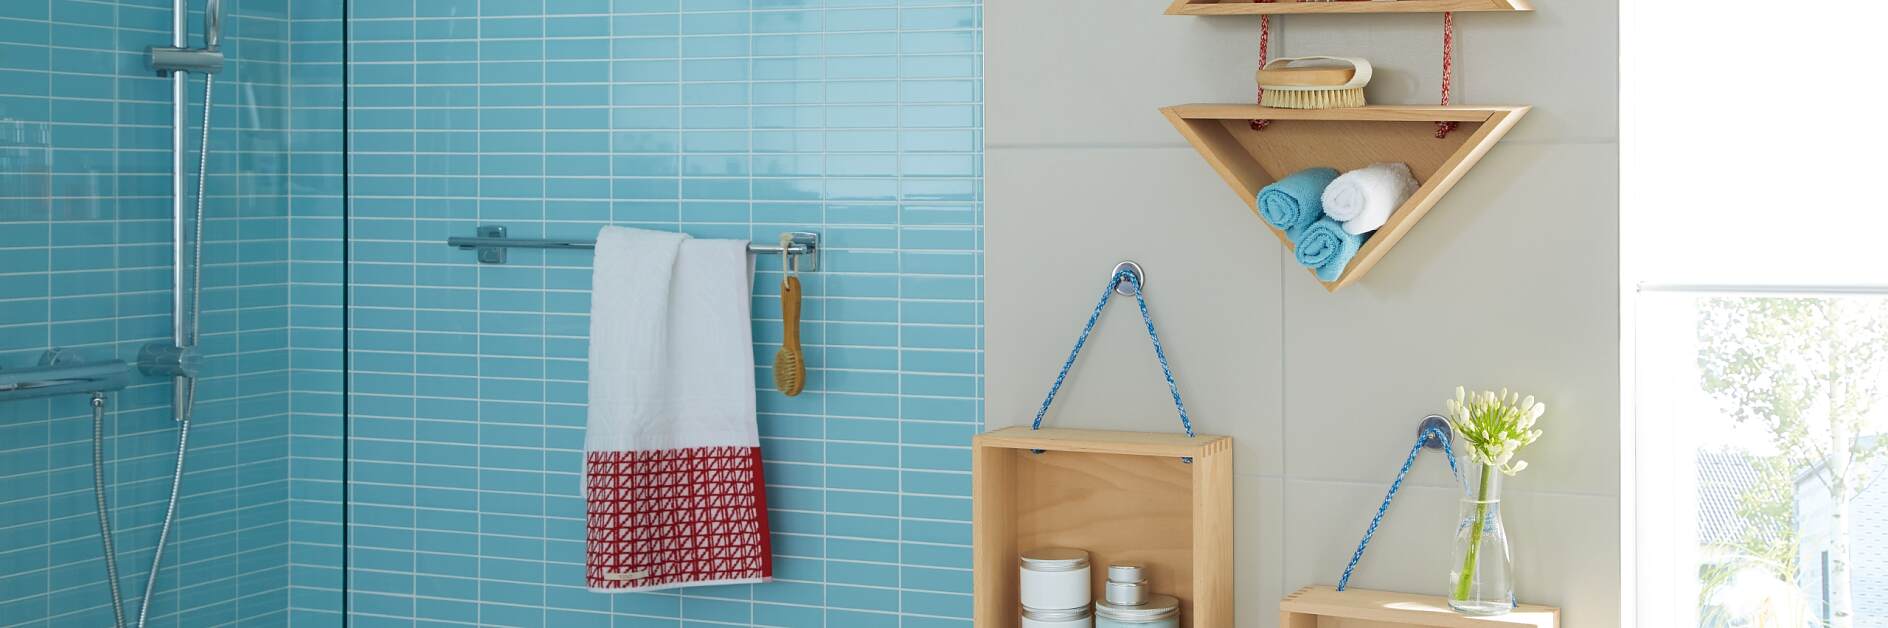 Acrylic Bathroom Shelves 1Pack Clear Shower Floating Shelf w/ Hooks No  Drilling